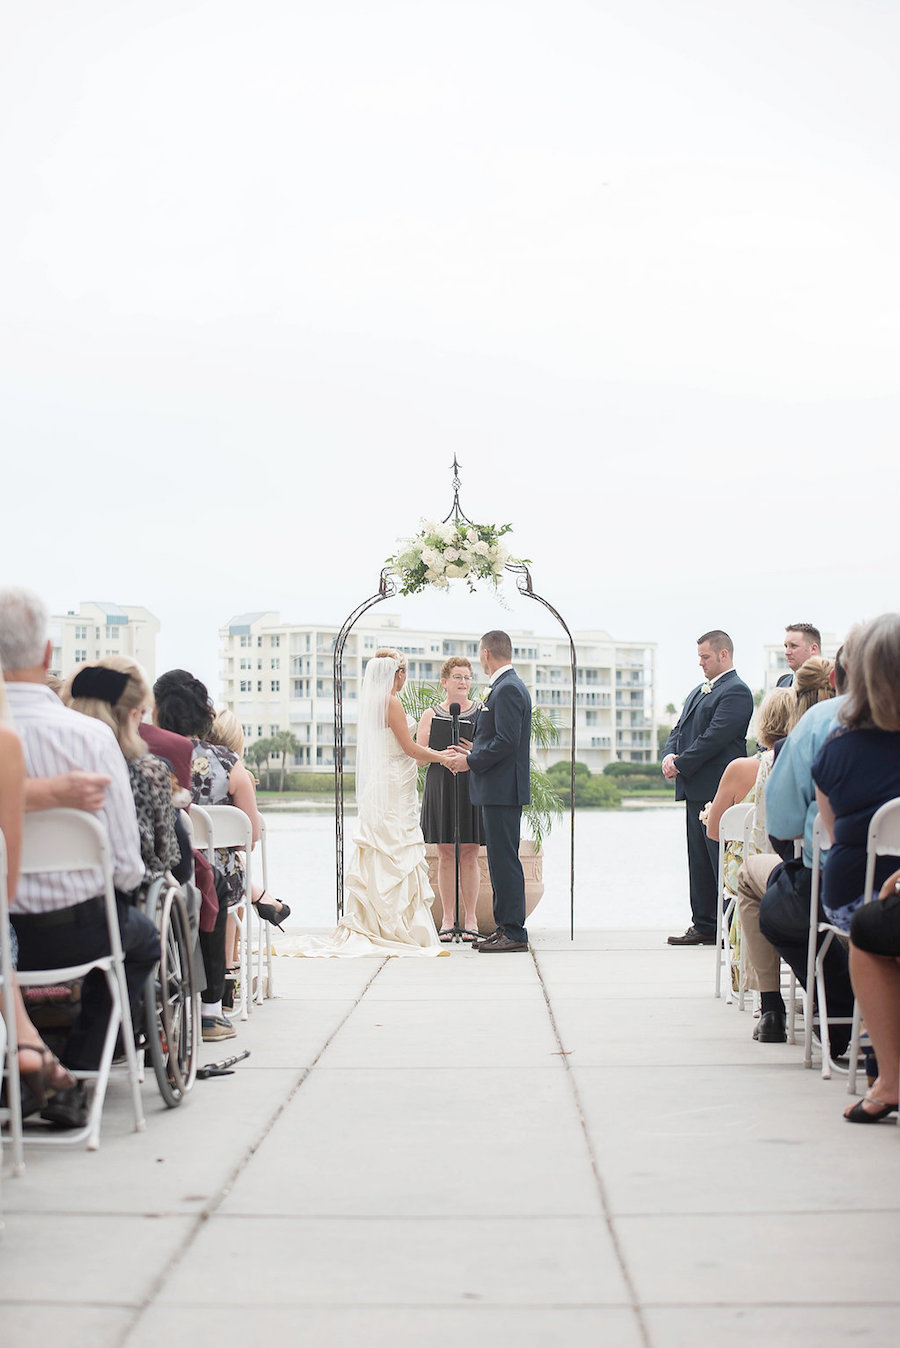 Waterfront St. Petersburg Wedding Ceremony | St. Pete Beach Rec Community Center Wedding Venue | Wedding Photographer Kristen Marie Photography